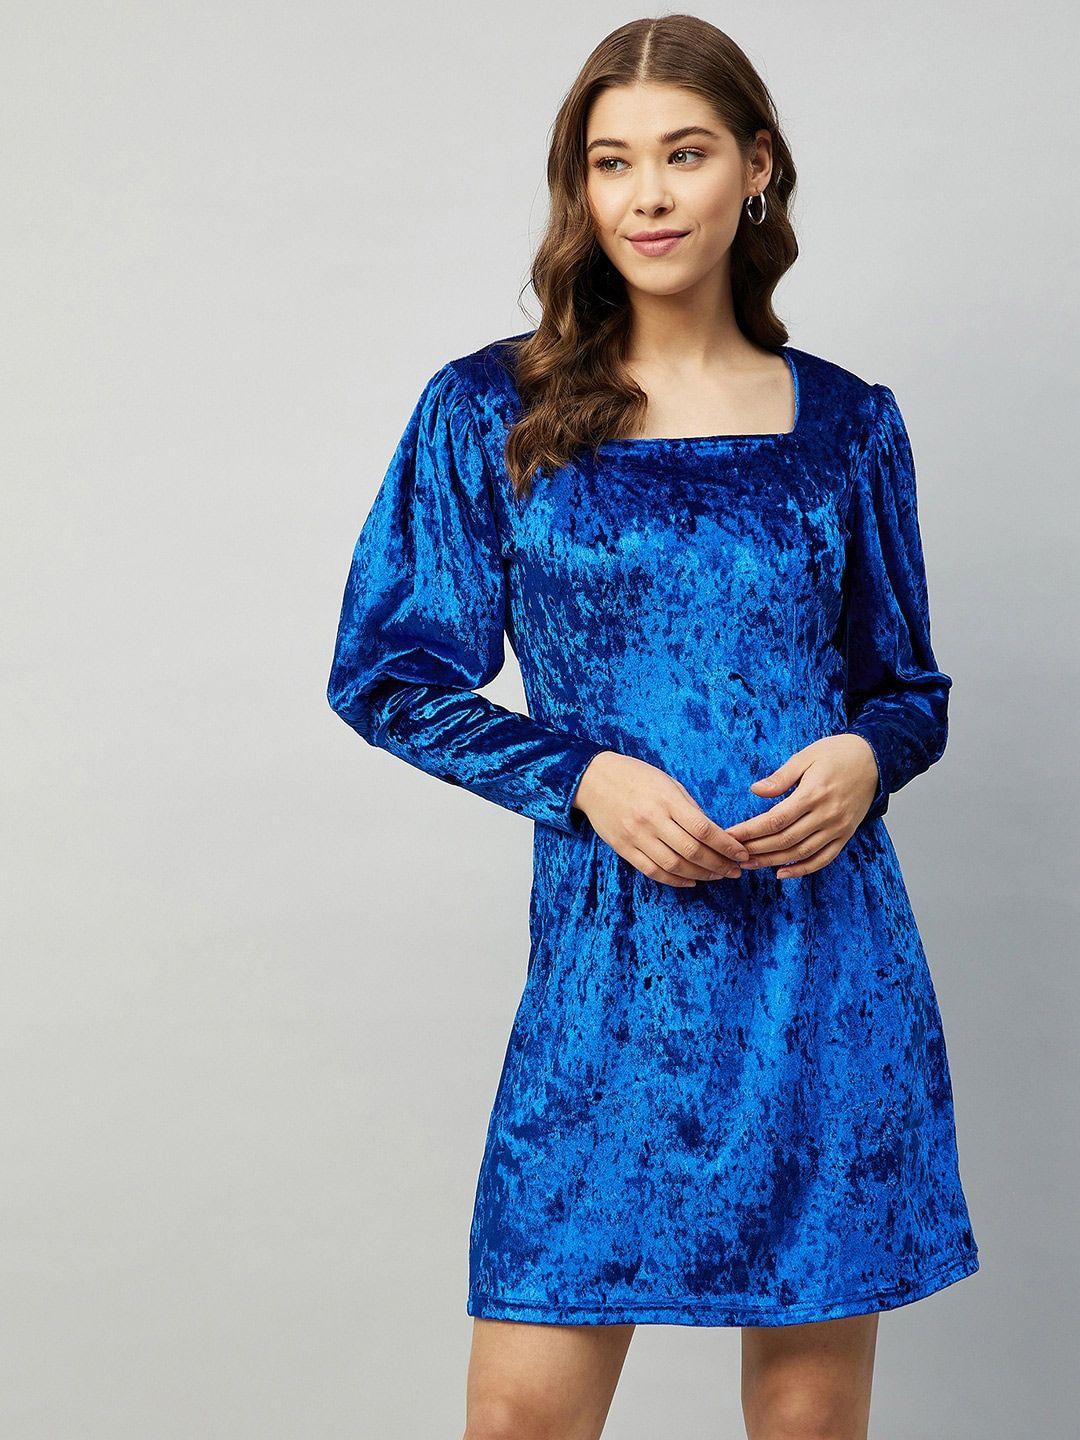 carlton london woman blue velvet a-line dress